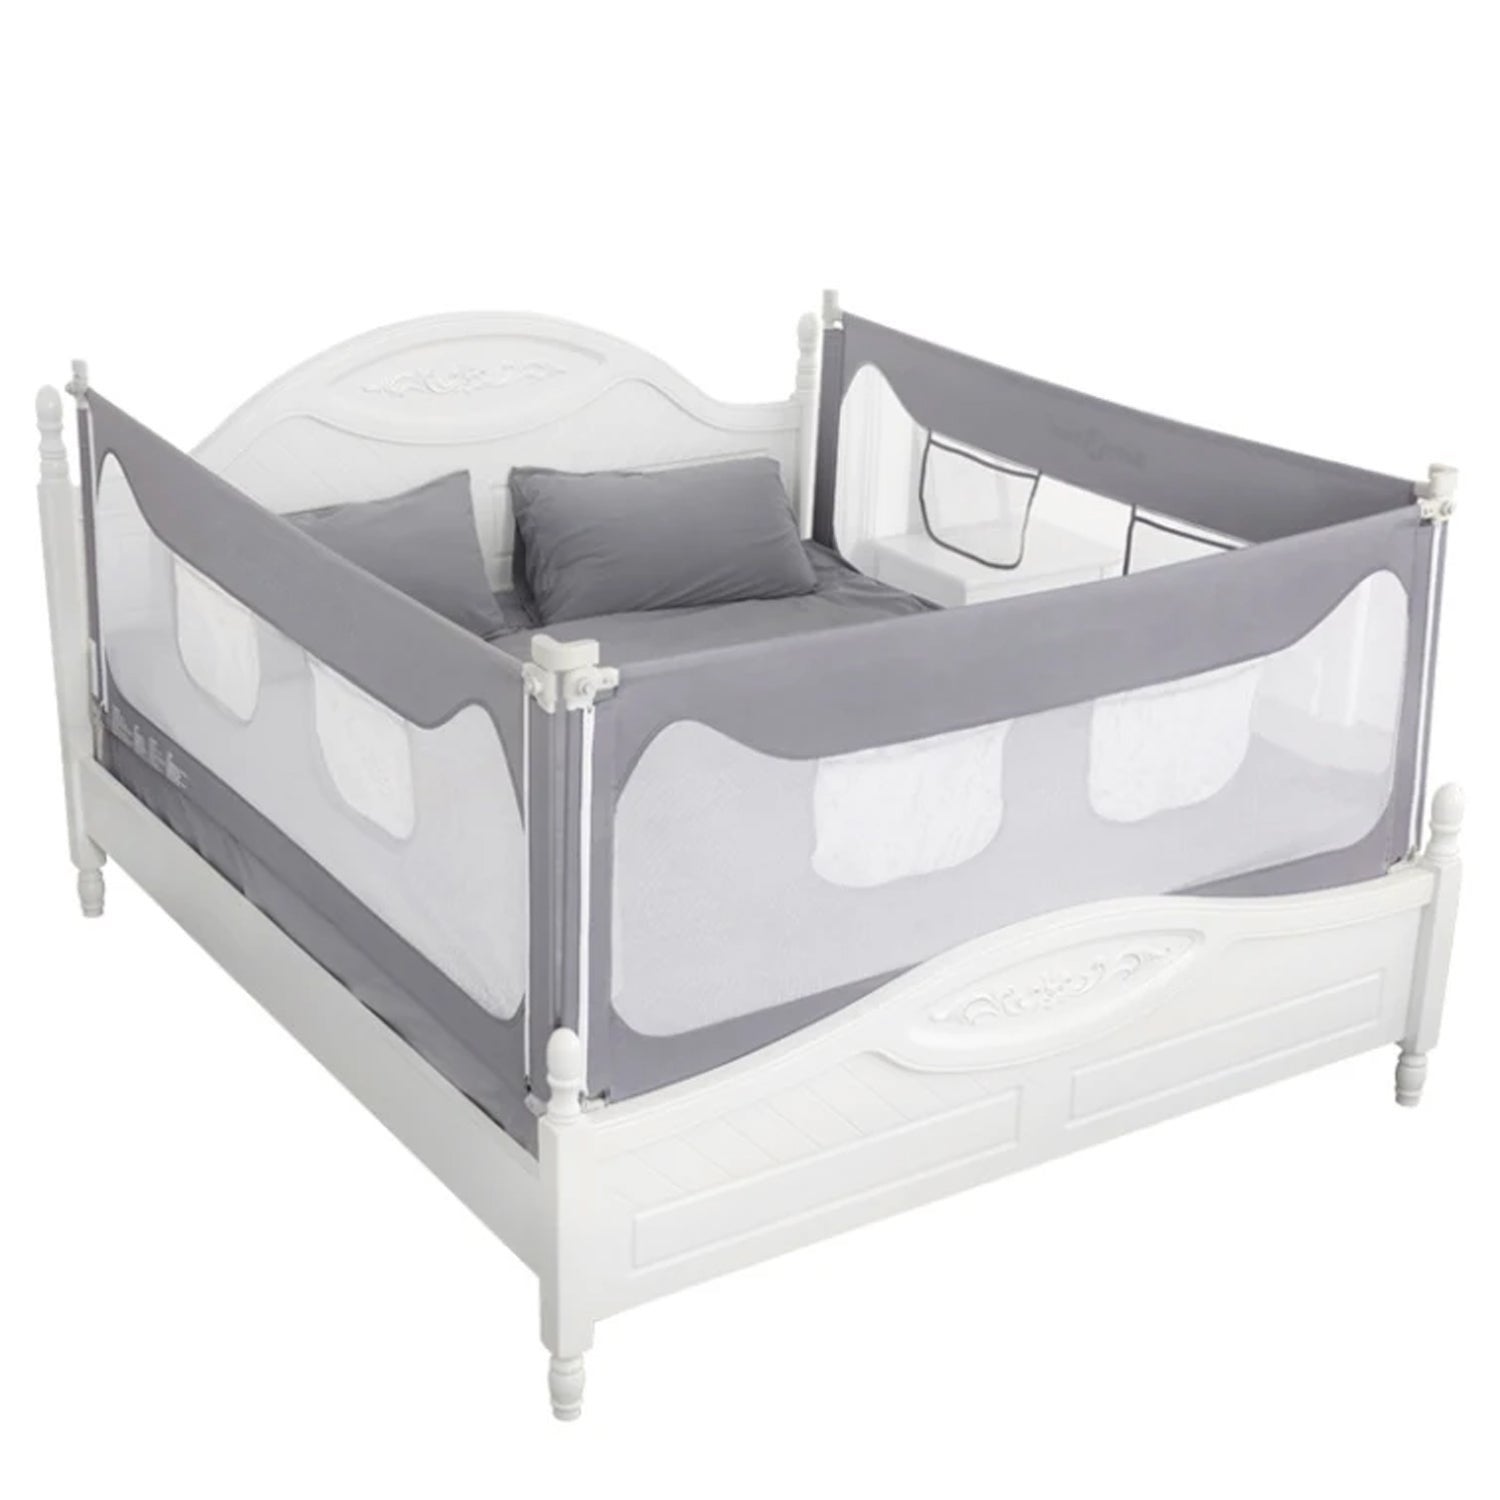 Adjustable Folding Kids Safety Bed Rail/BedRail Cot Guard Protecte Child Toddler